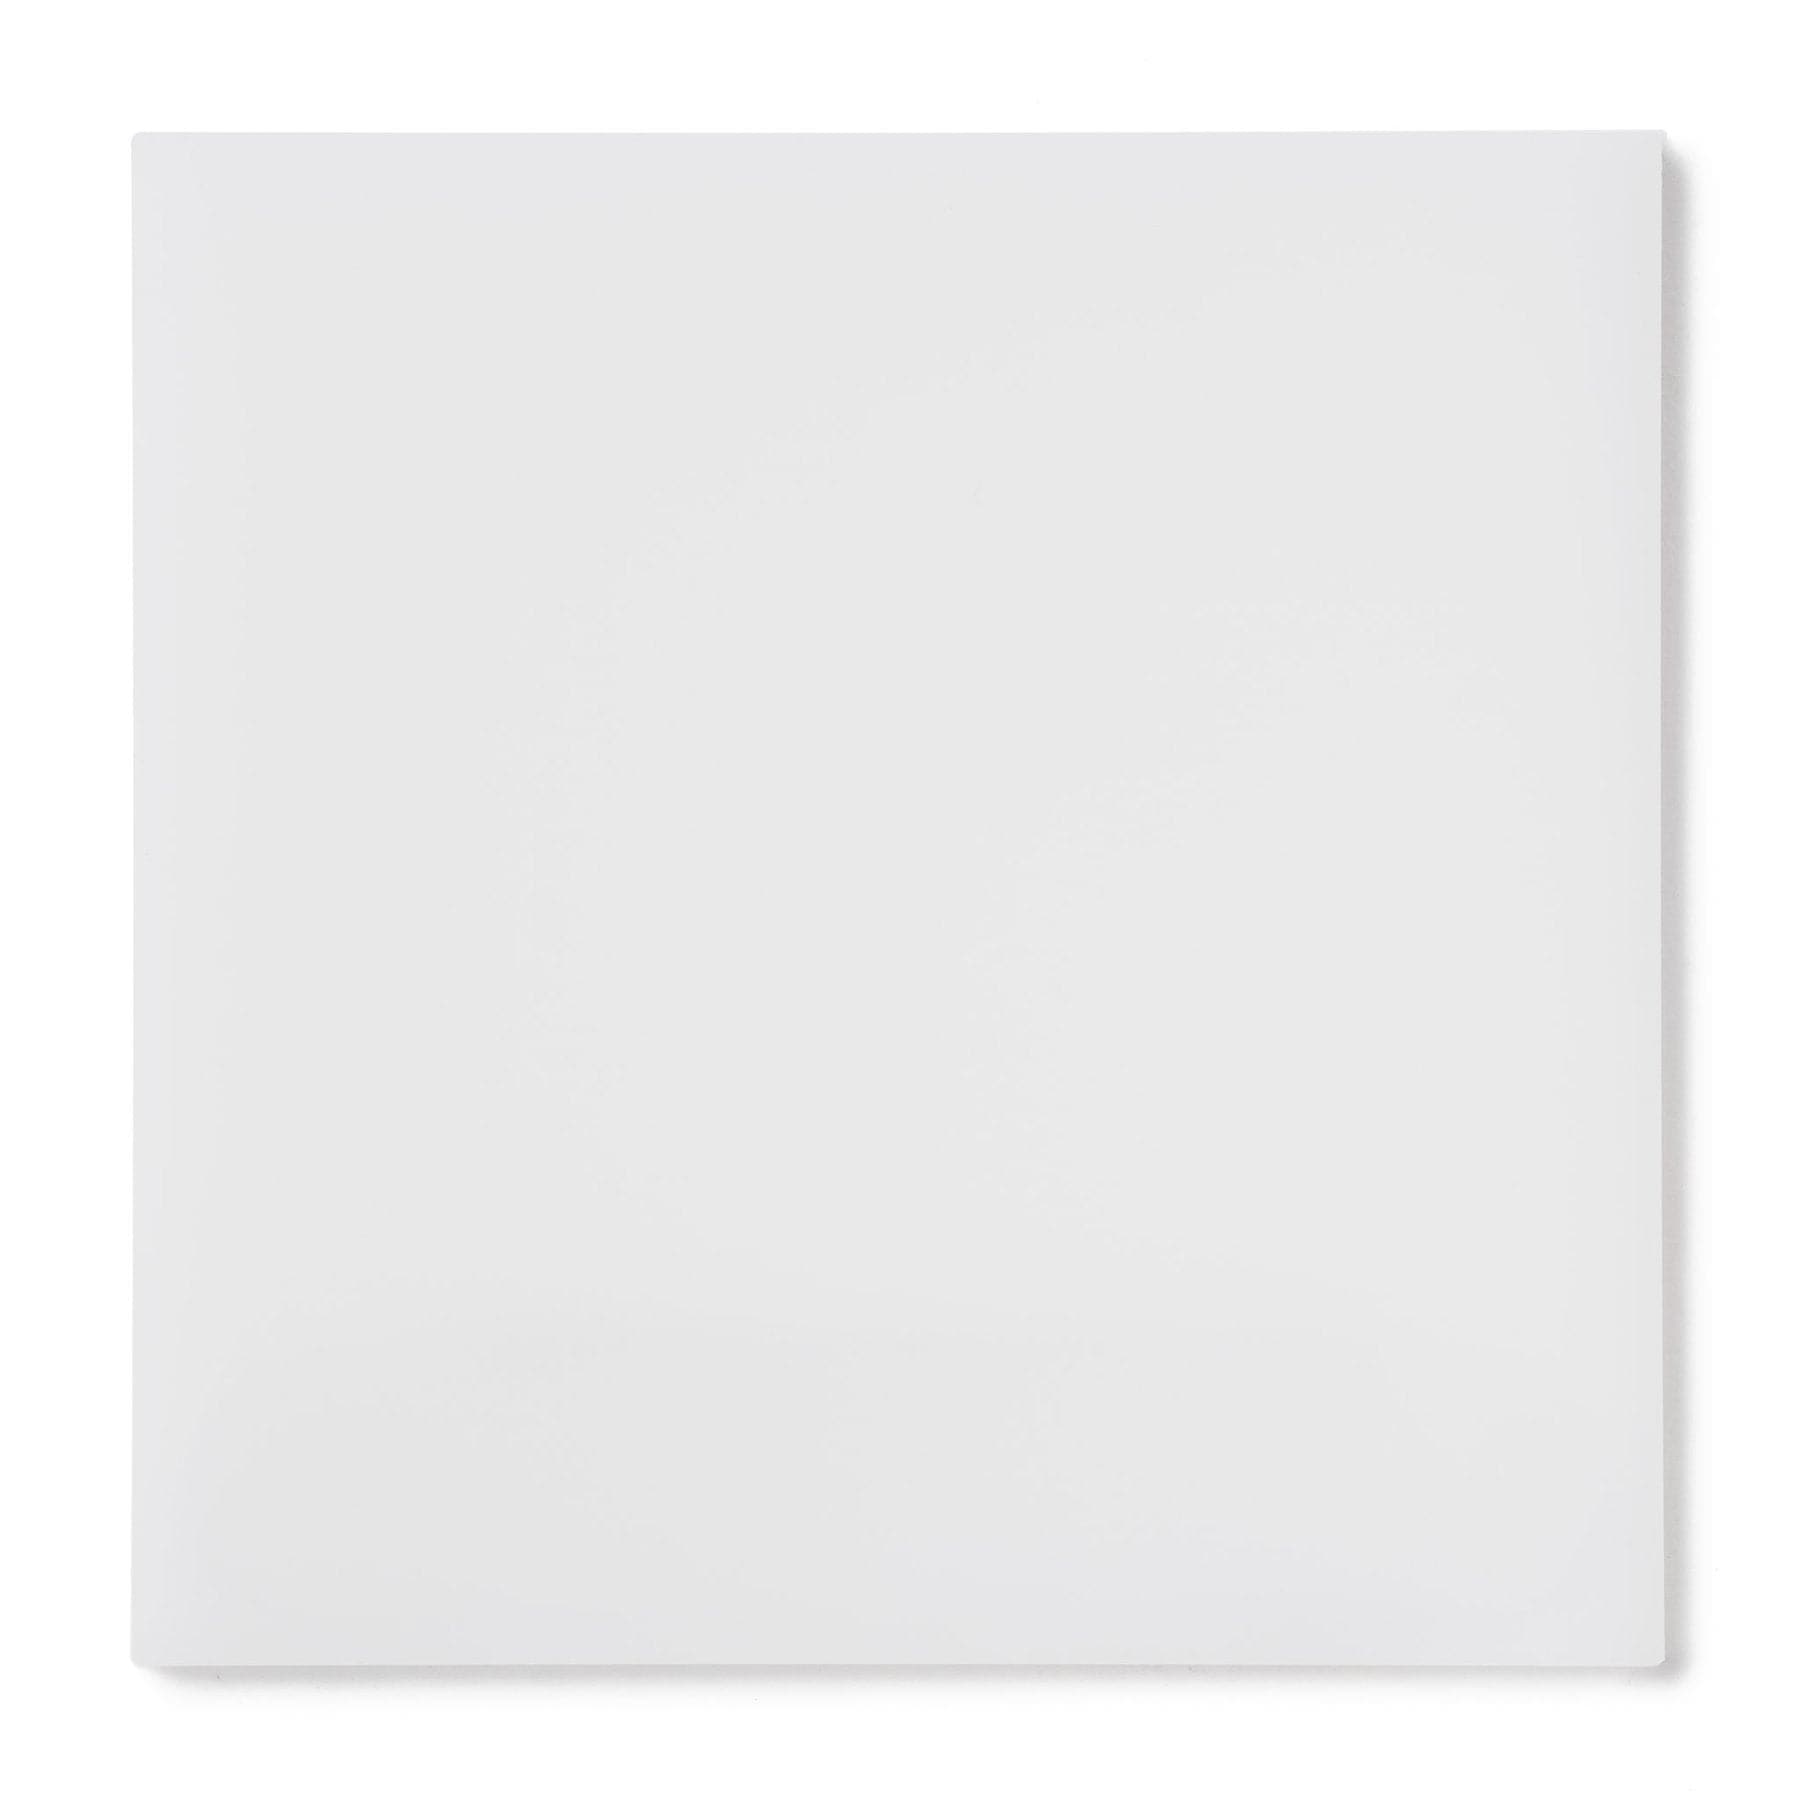 Acrylic Sheet 1/8" Diffuse White #2447